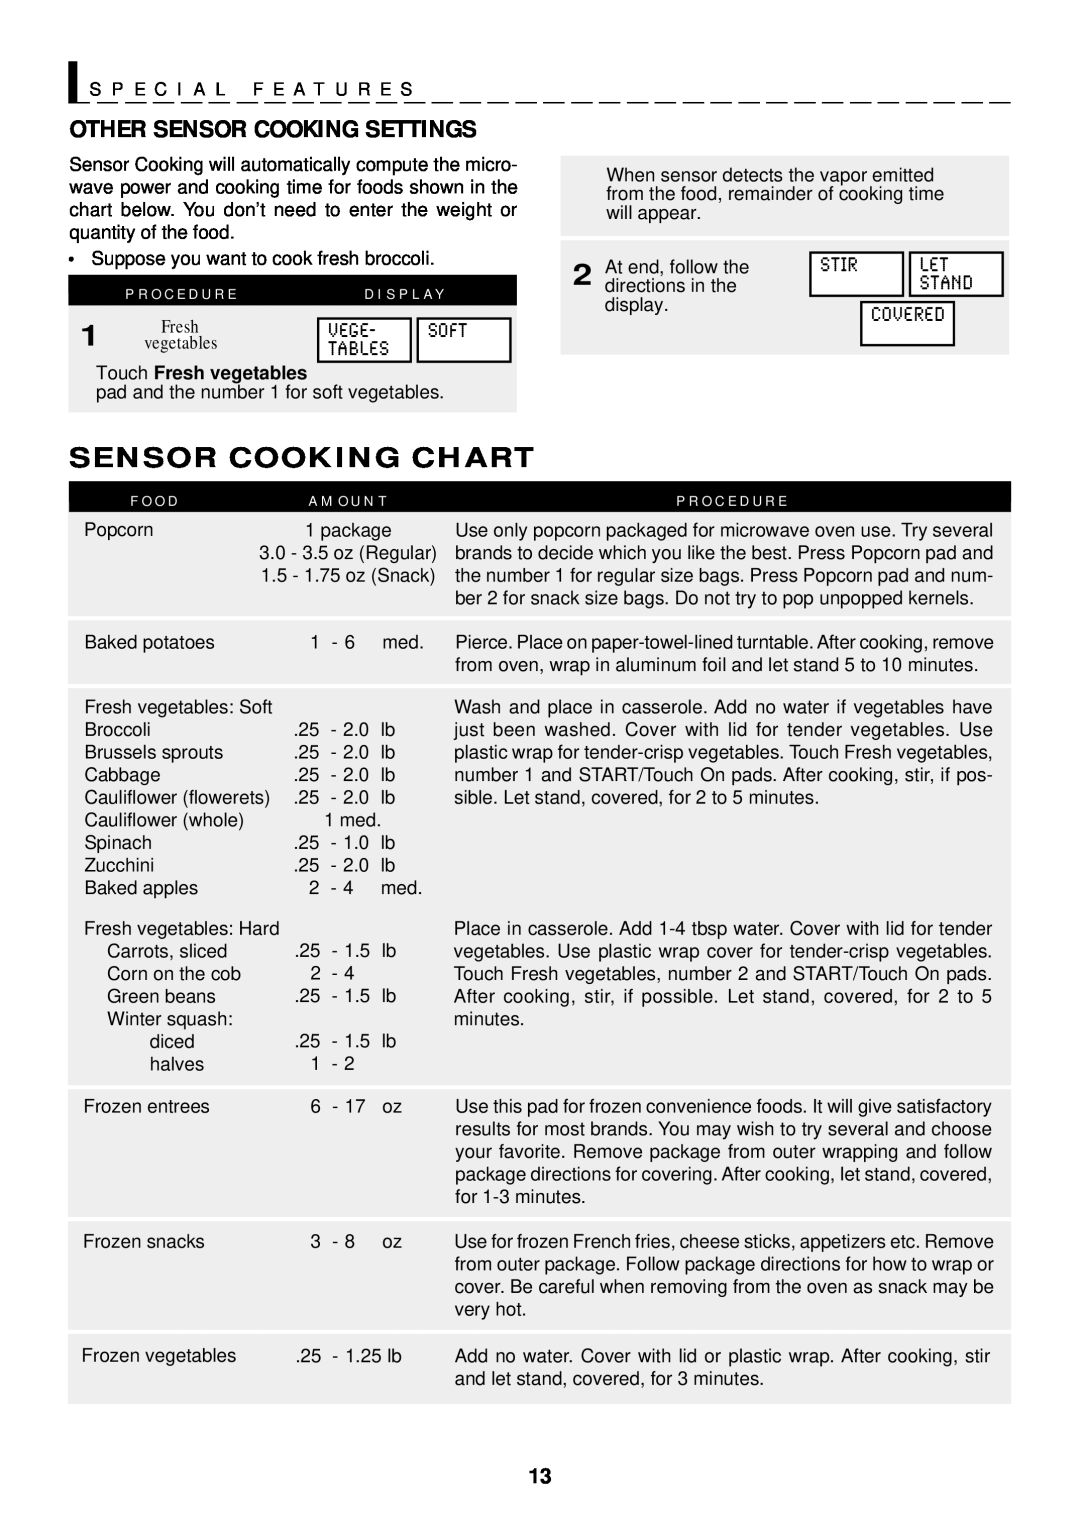 Sharp R-1611 S P E C I A L F E A T U R E S, Other Sensor Cooking Settings, Sensor Cooking Chart, A M O U N T, F O O D 